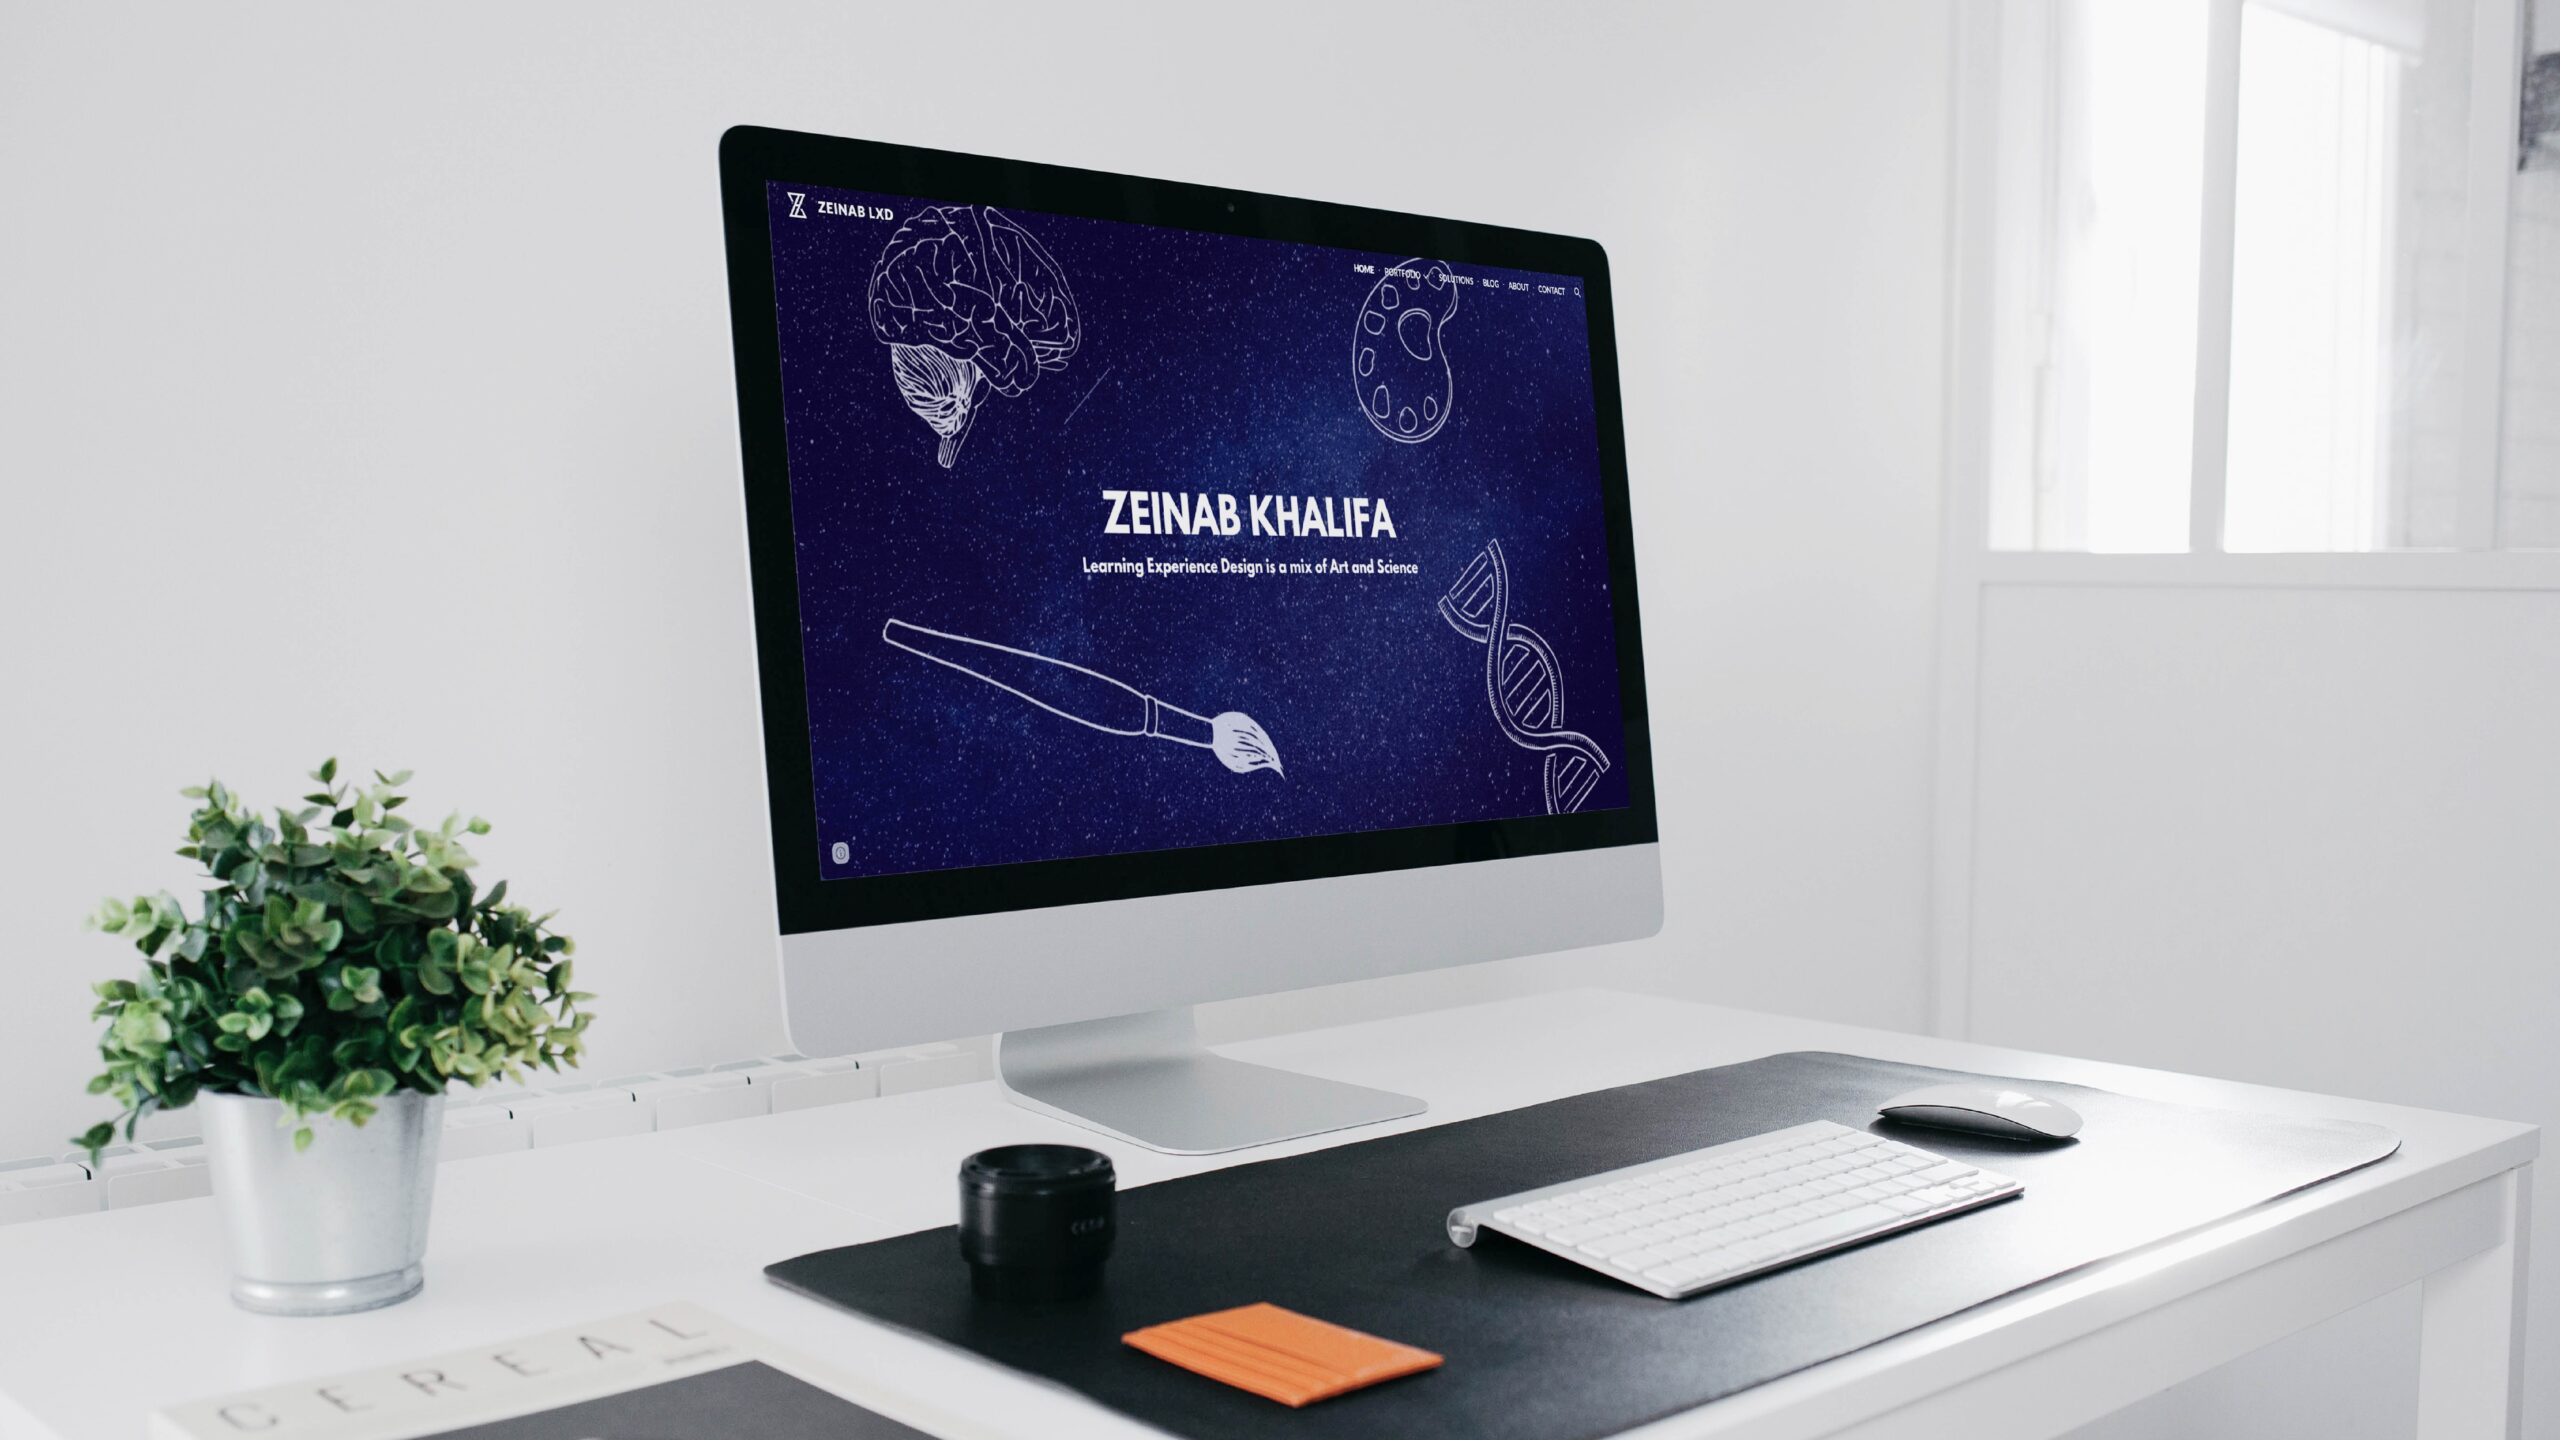 Zeinab Khalifa's Student Story | The eLearning Designer's Academy by Tim Slade